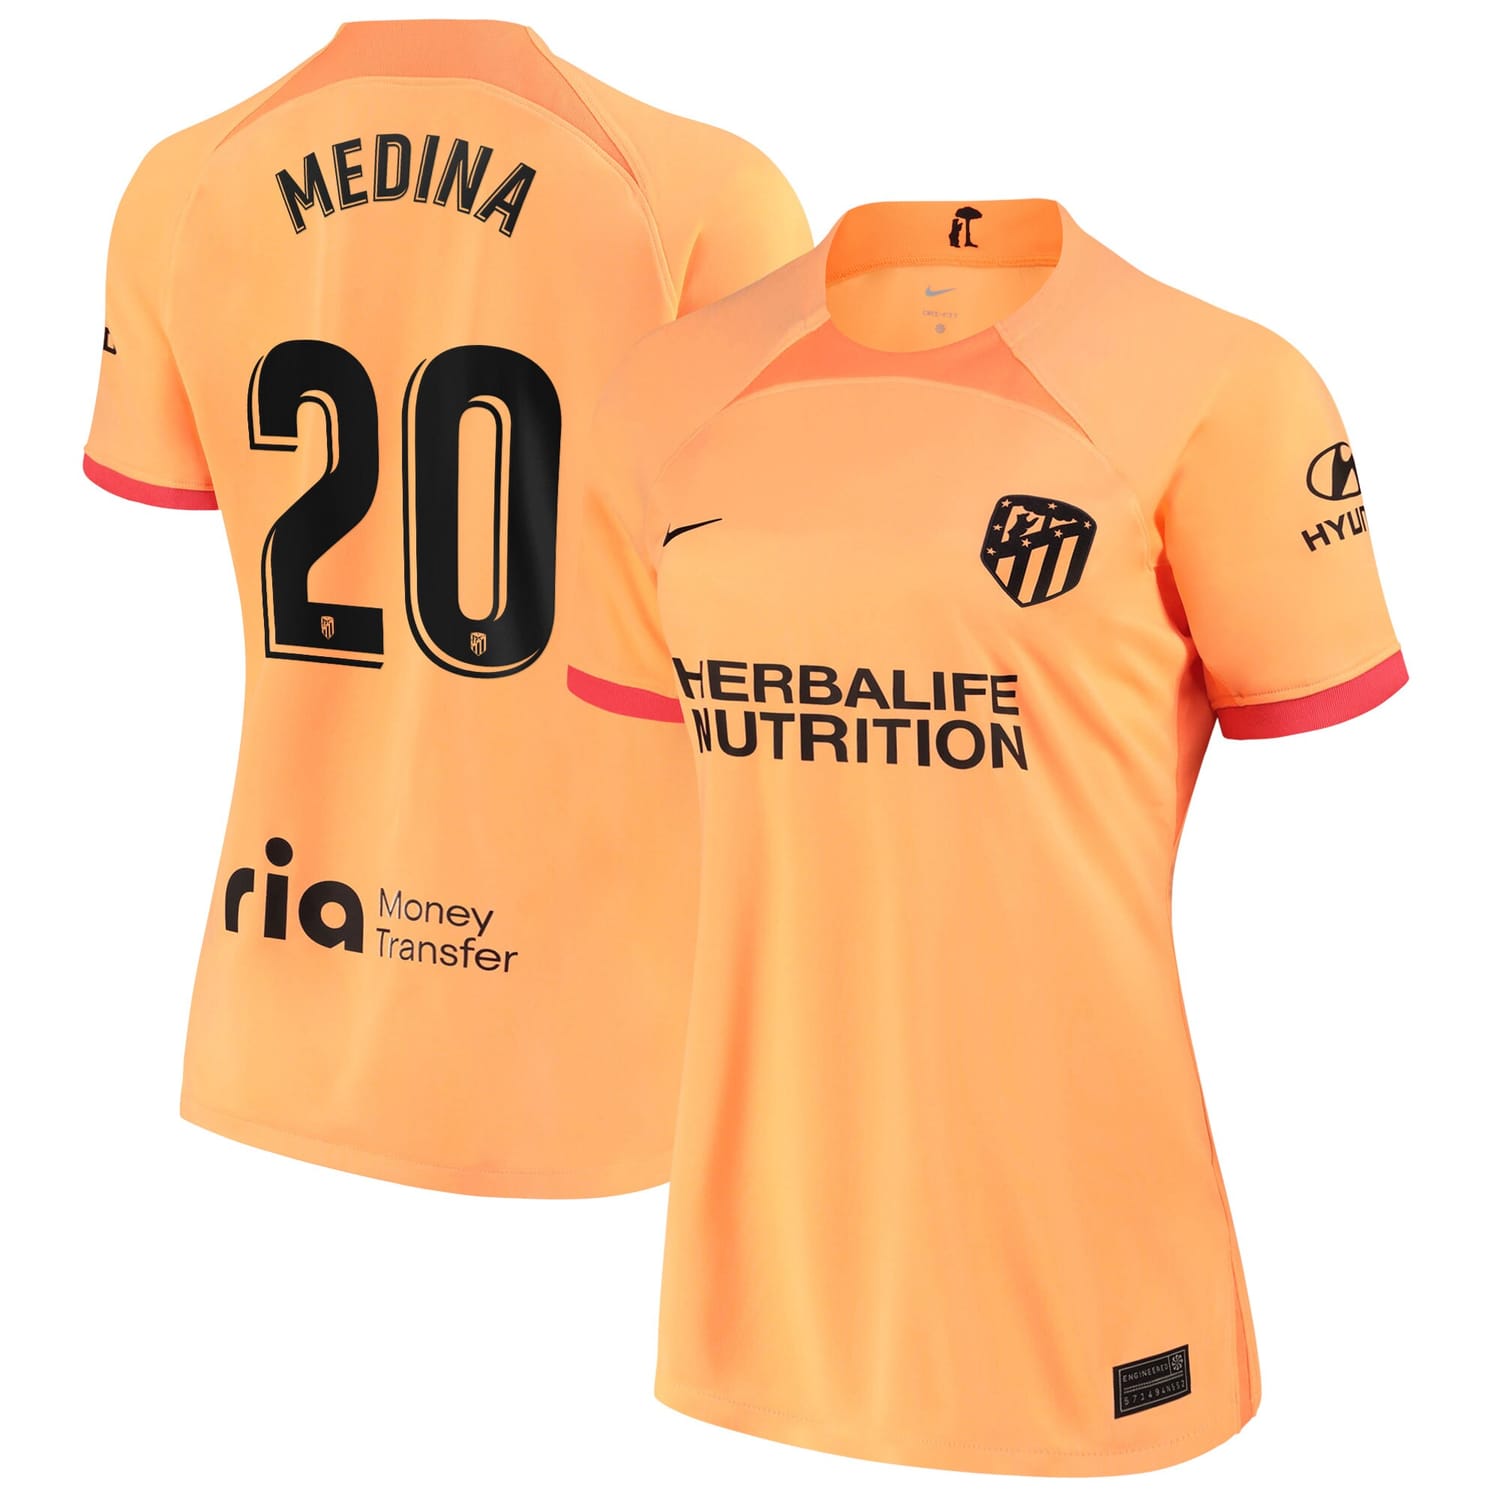 La Liga Atletico de Madrid Third Jersey Shirt 2022-23 player Andrea Medina 20 printing for Women